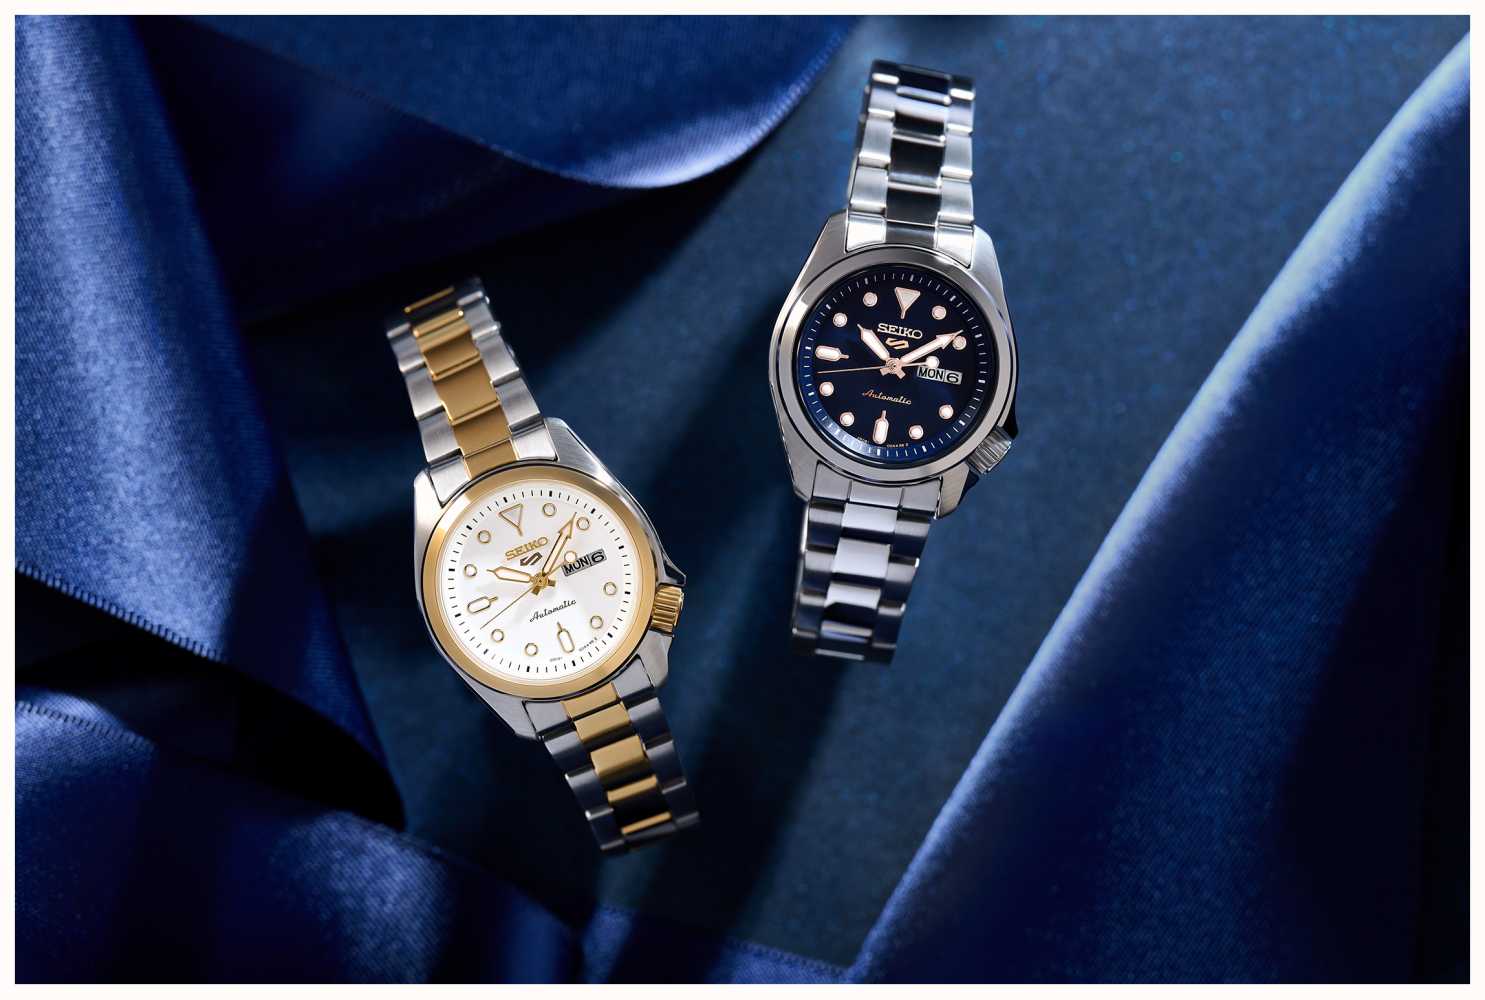 First Automatische 5 Seiko Class | Sport 28mm Blaues Kompakt Watches™ Uhr - Zifferblatt | | DEU SRE003K1